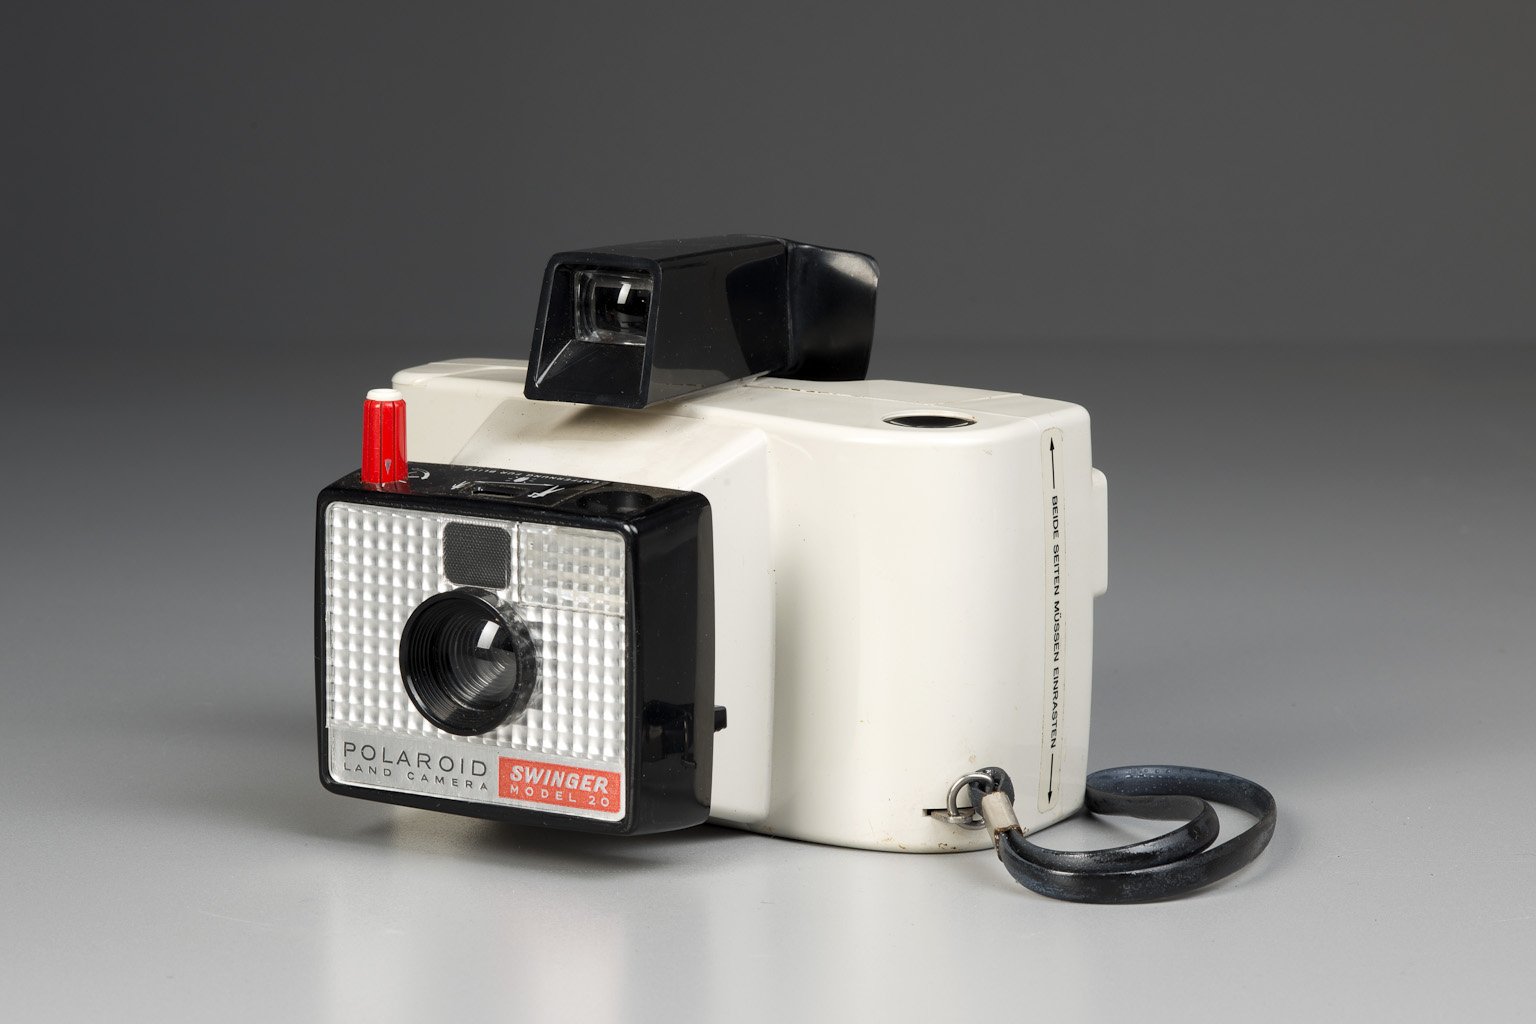 Sofortbildkamera Polaroid Swinger Model 20 (Freilichtmuseum Roscheider Hof CC0)